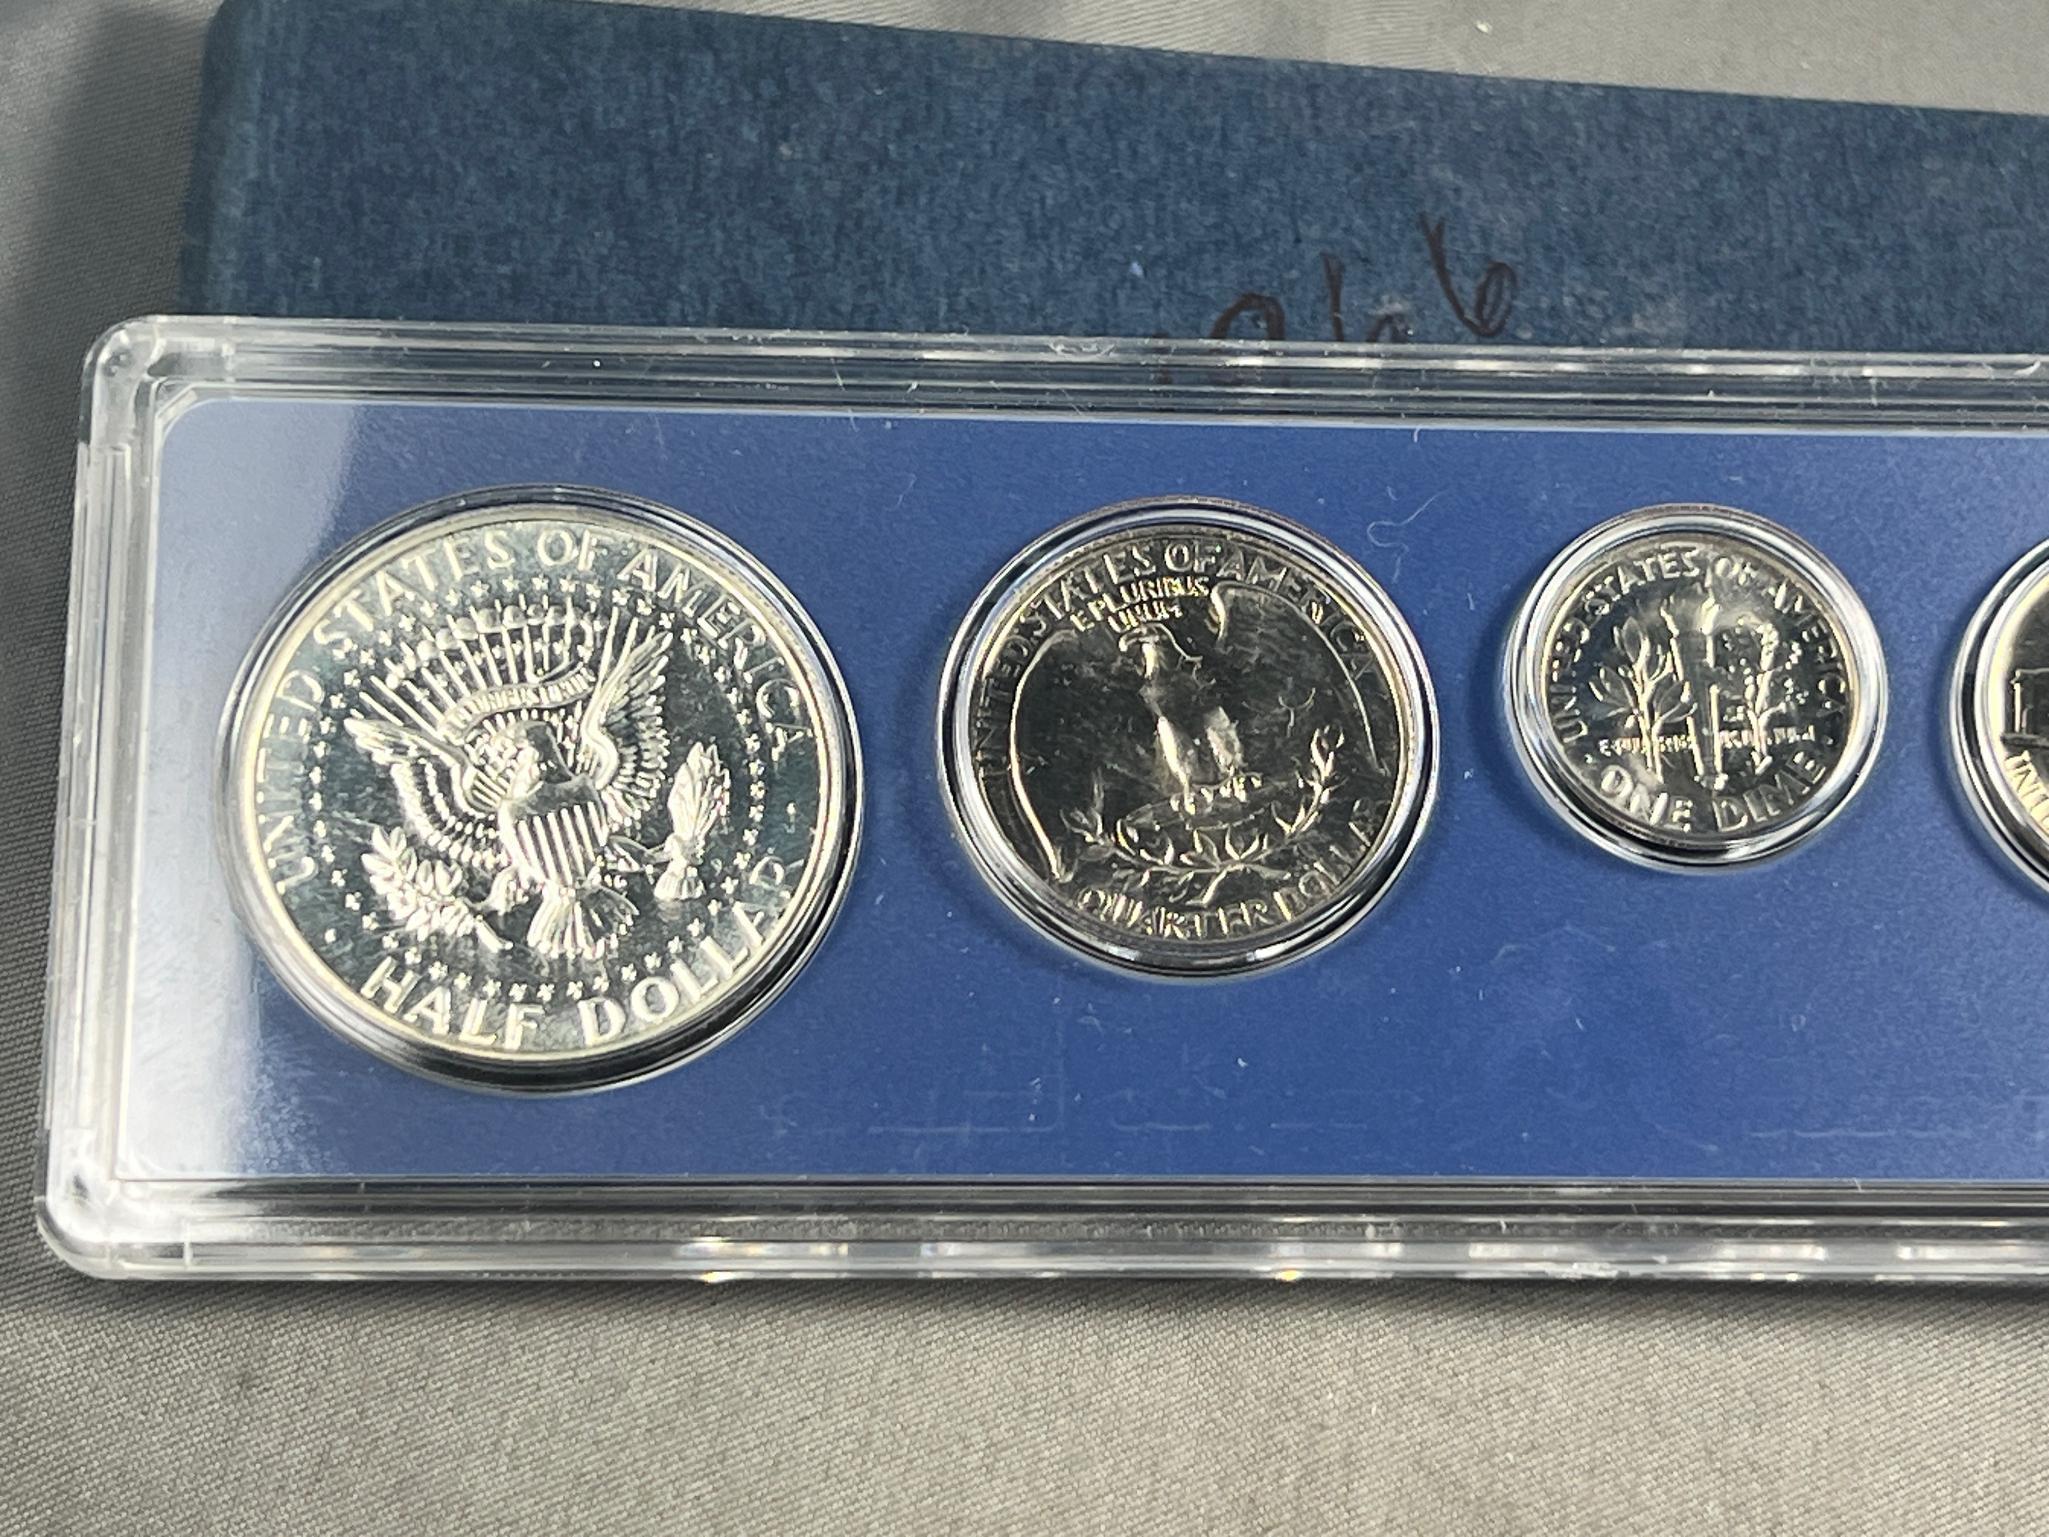 1966 SS Special Mint set